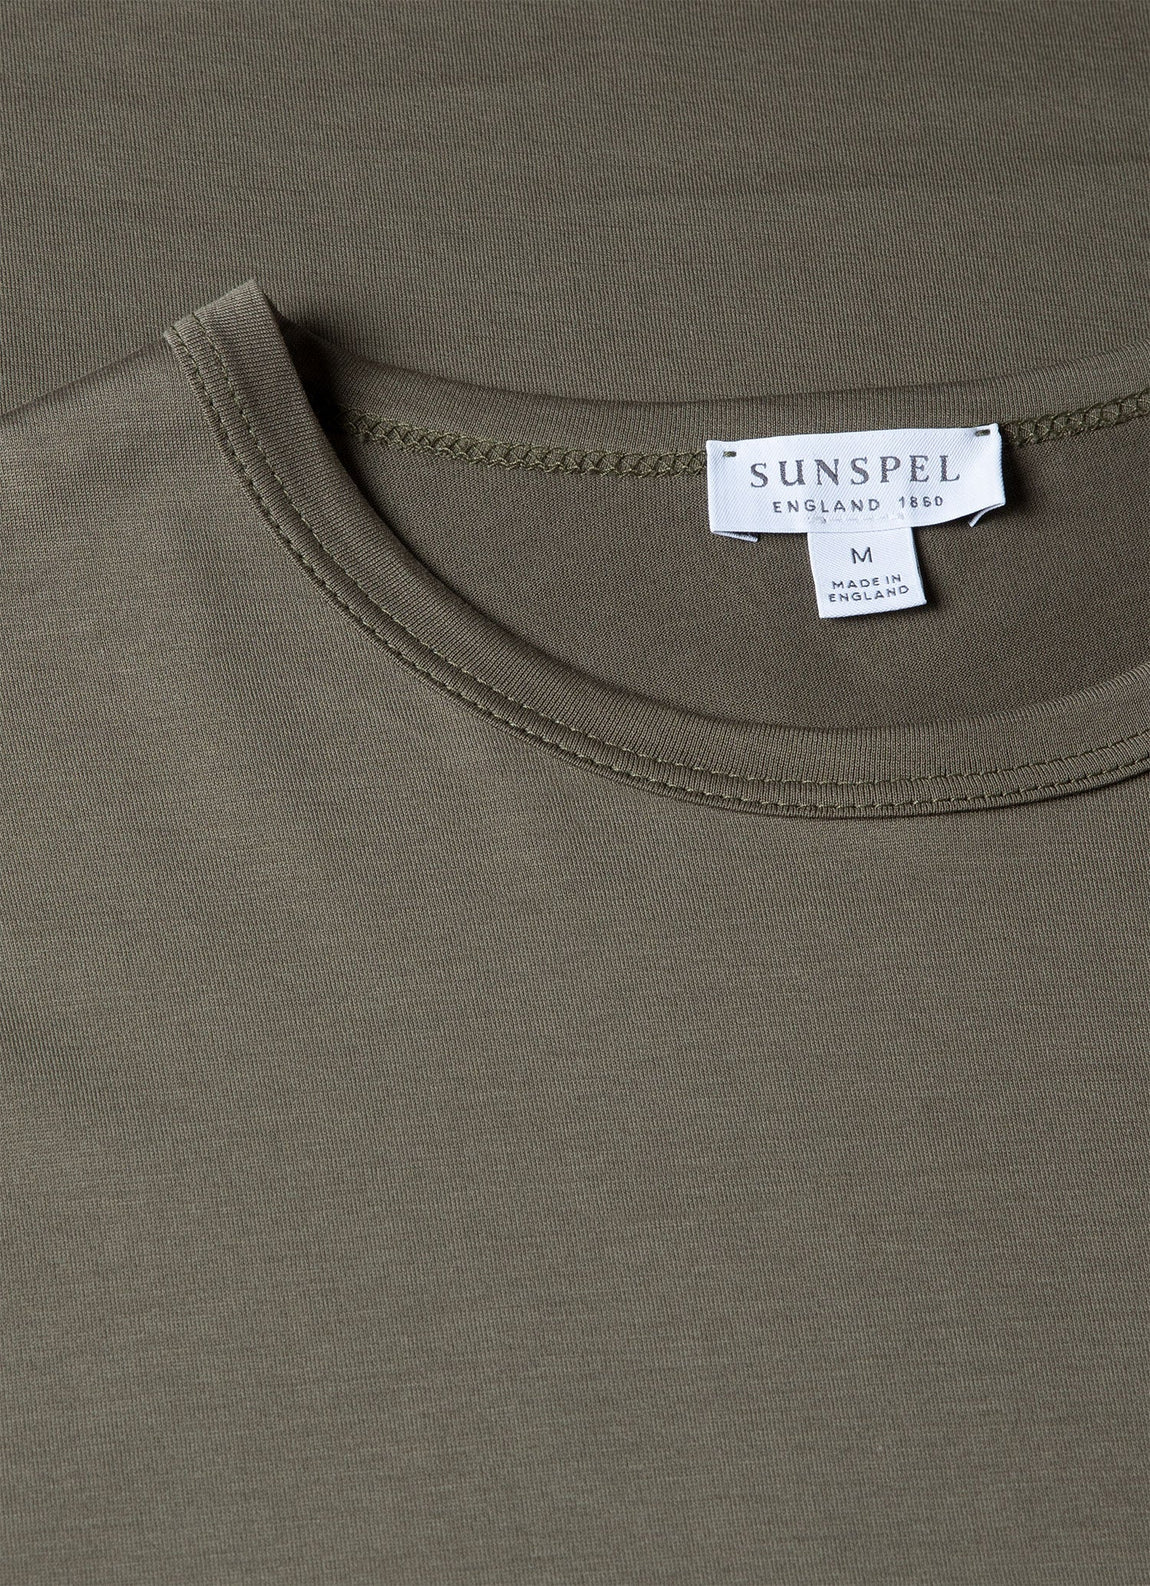 Men's Classic T-shirt in Khaki | Sunspel